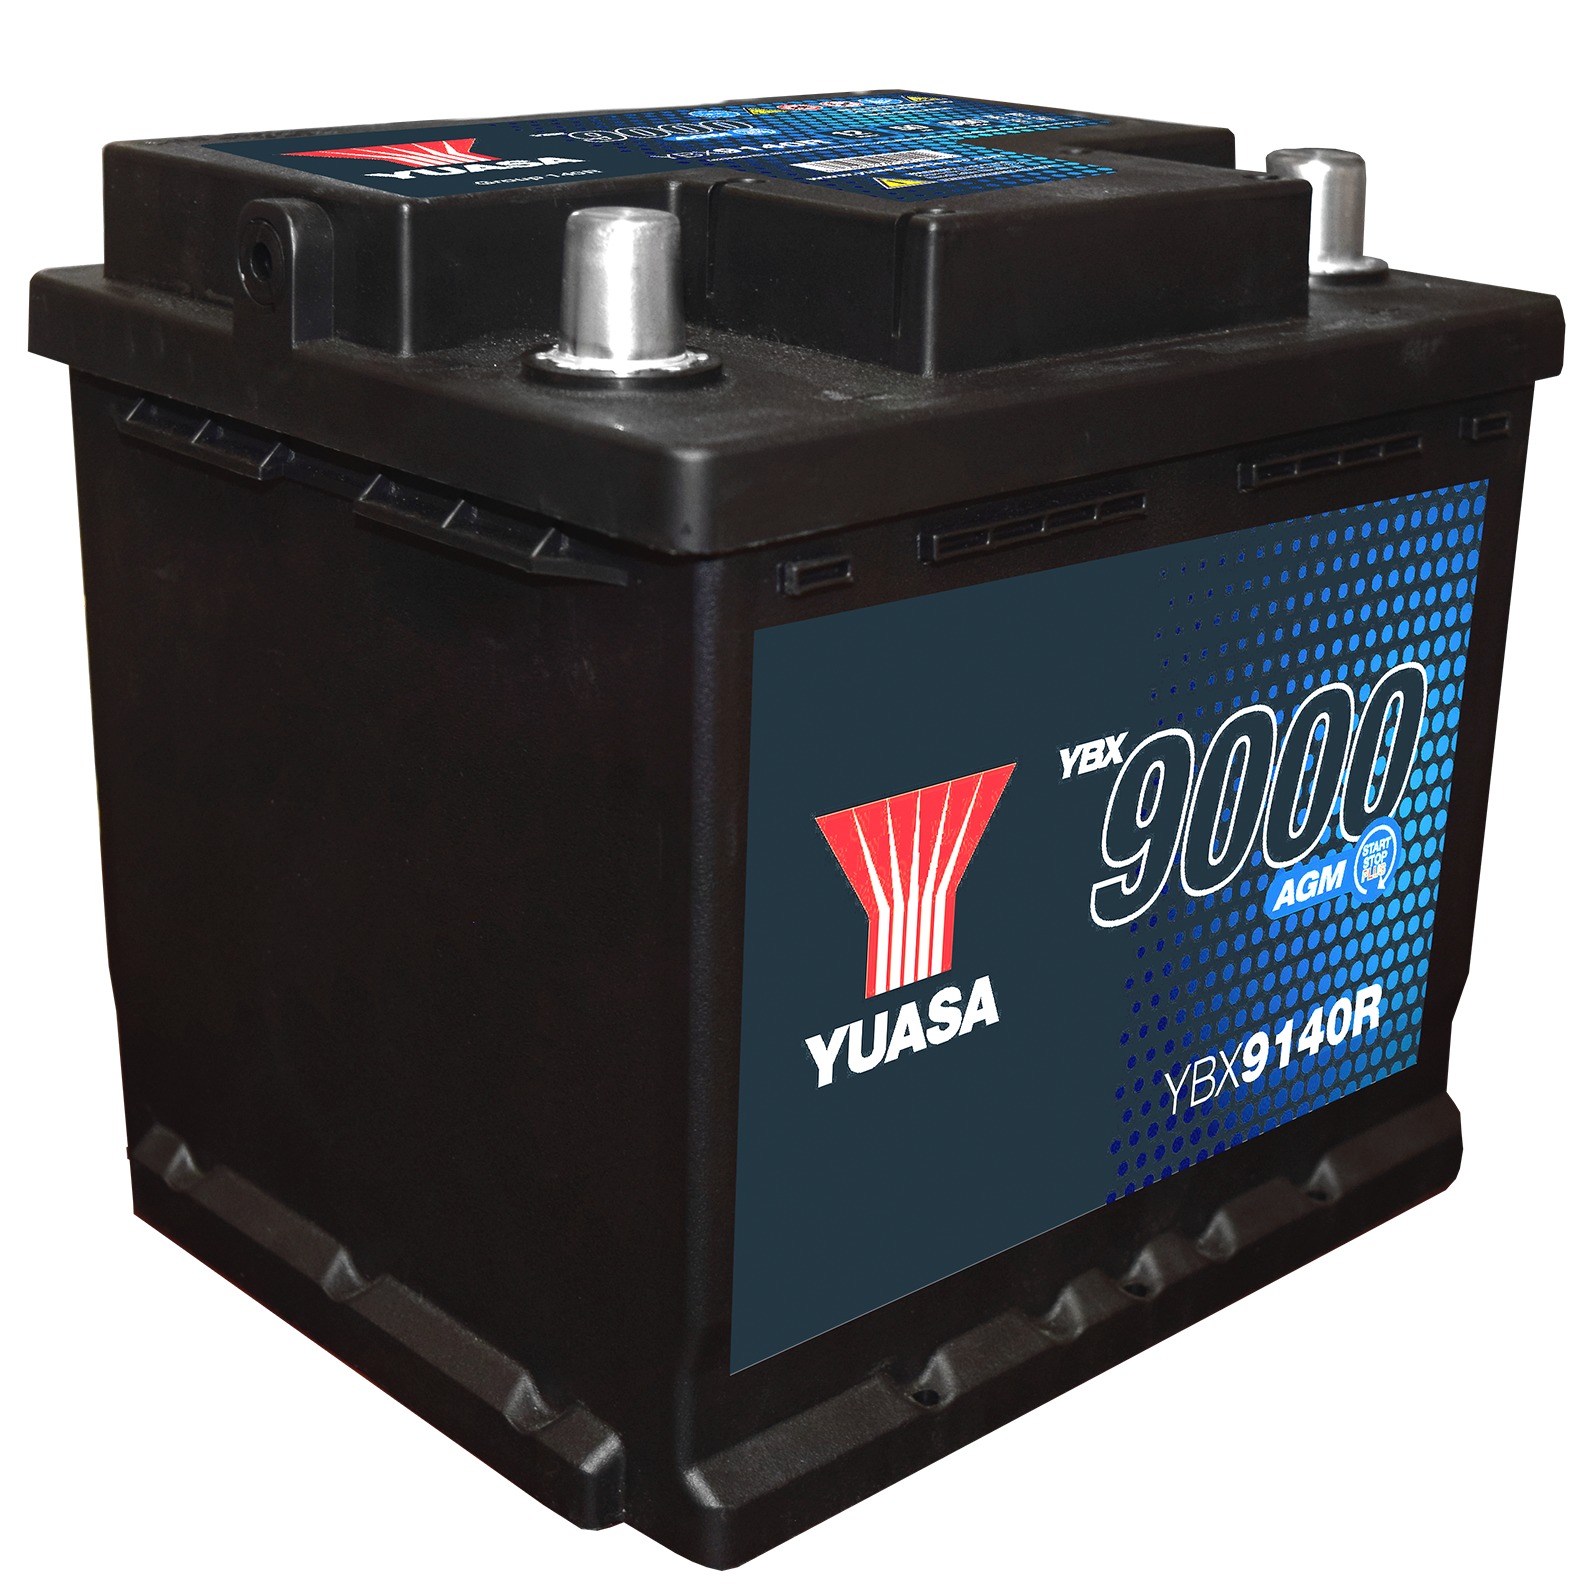 YBX9000 YBX9140R AGM Battery - 560 CCA, 50 Ah, Replaces # 26012-7501, 26012-1377 - Click Image to Close